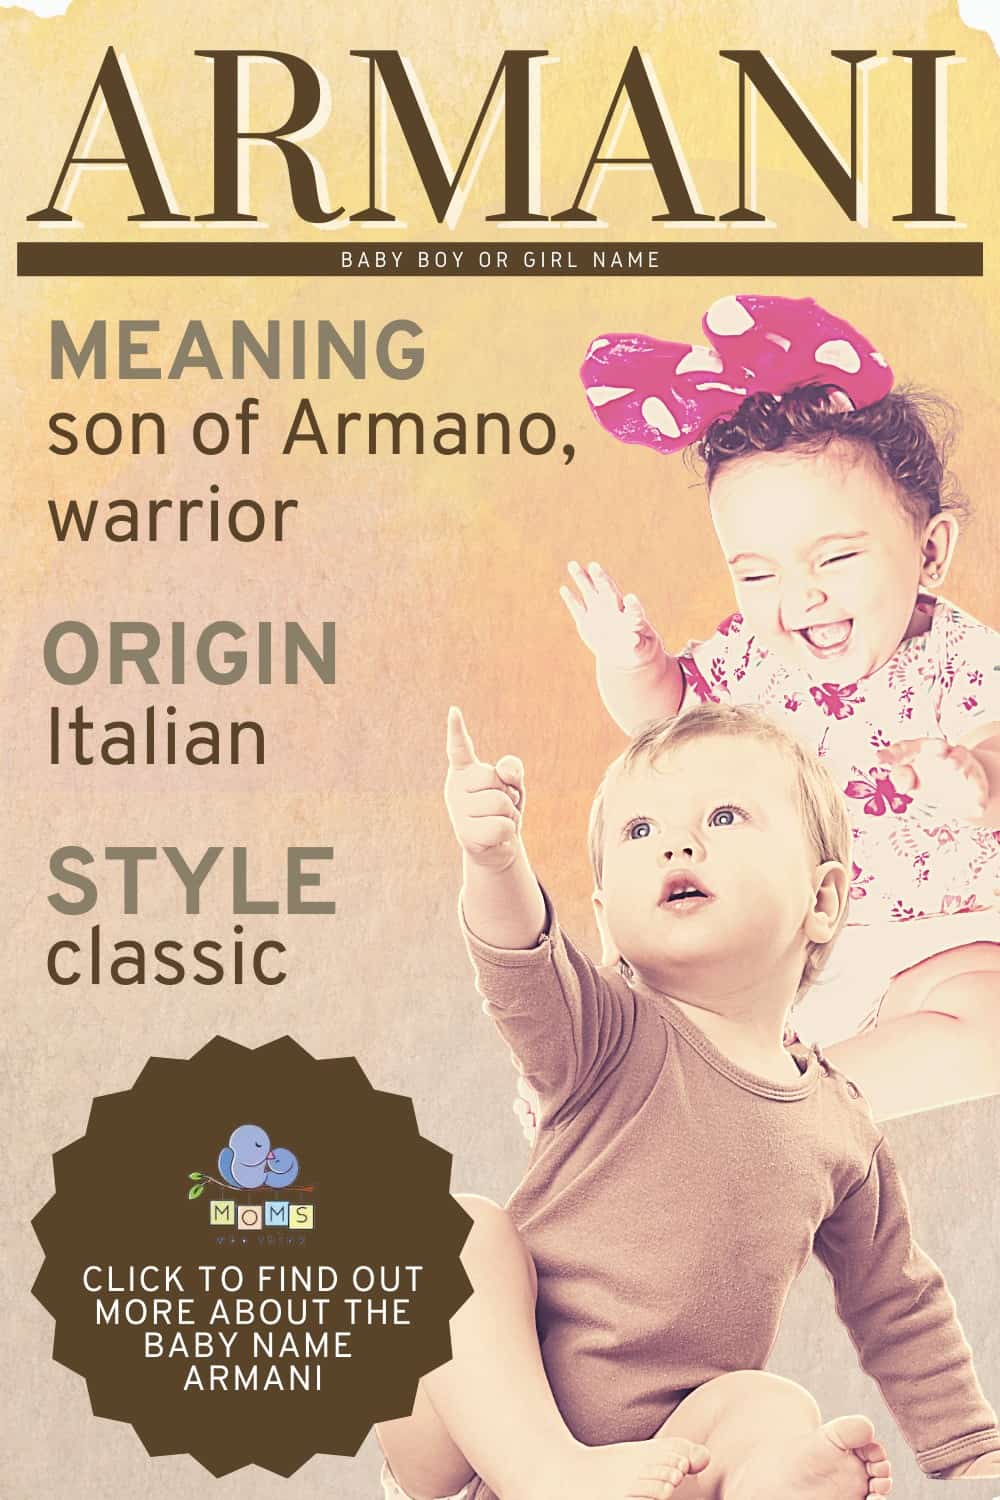 Baby name Armani